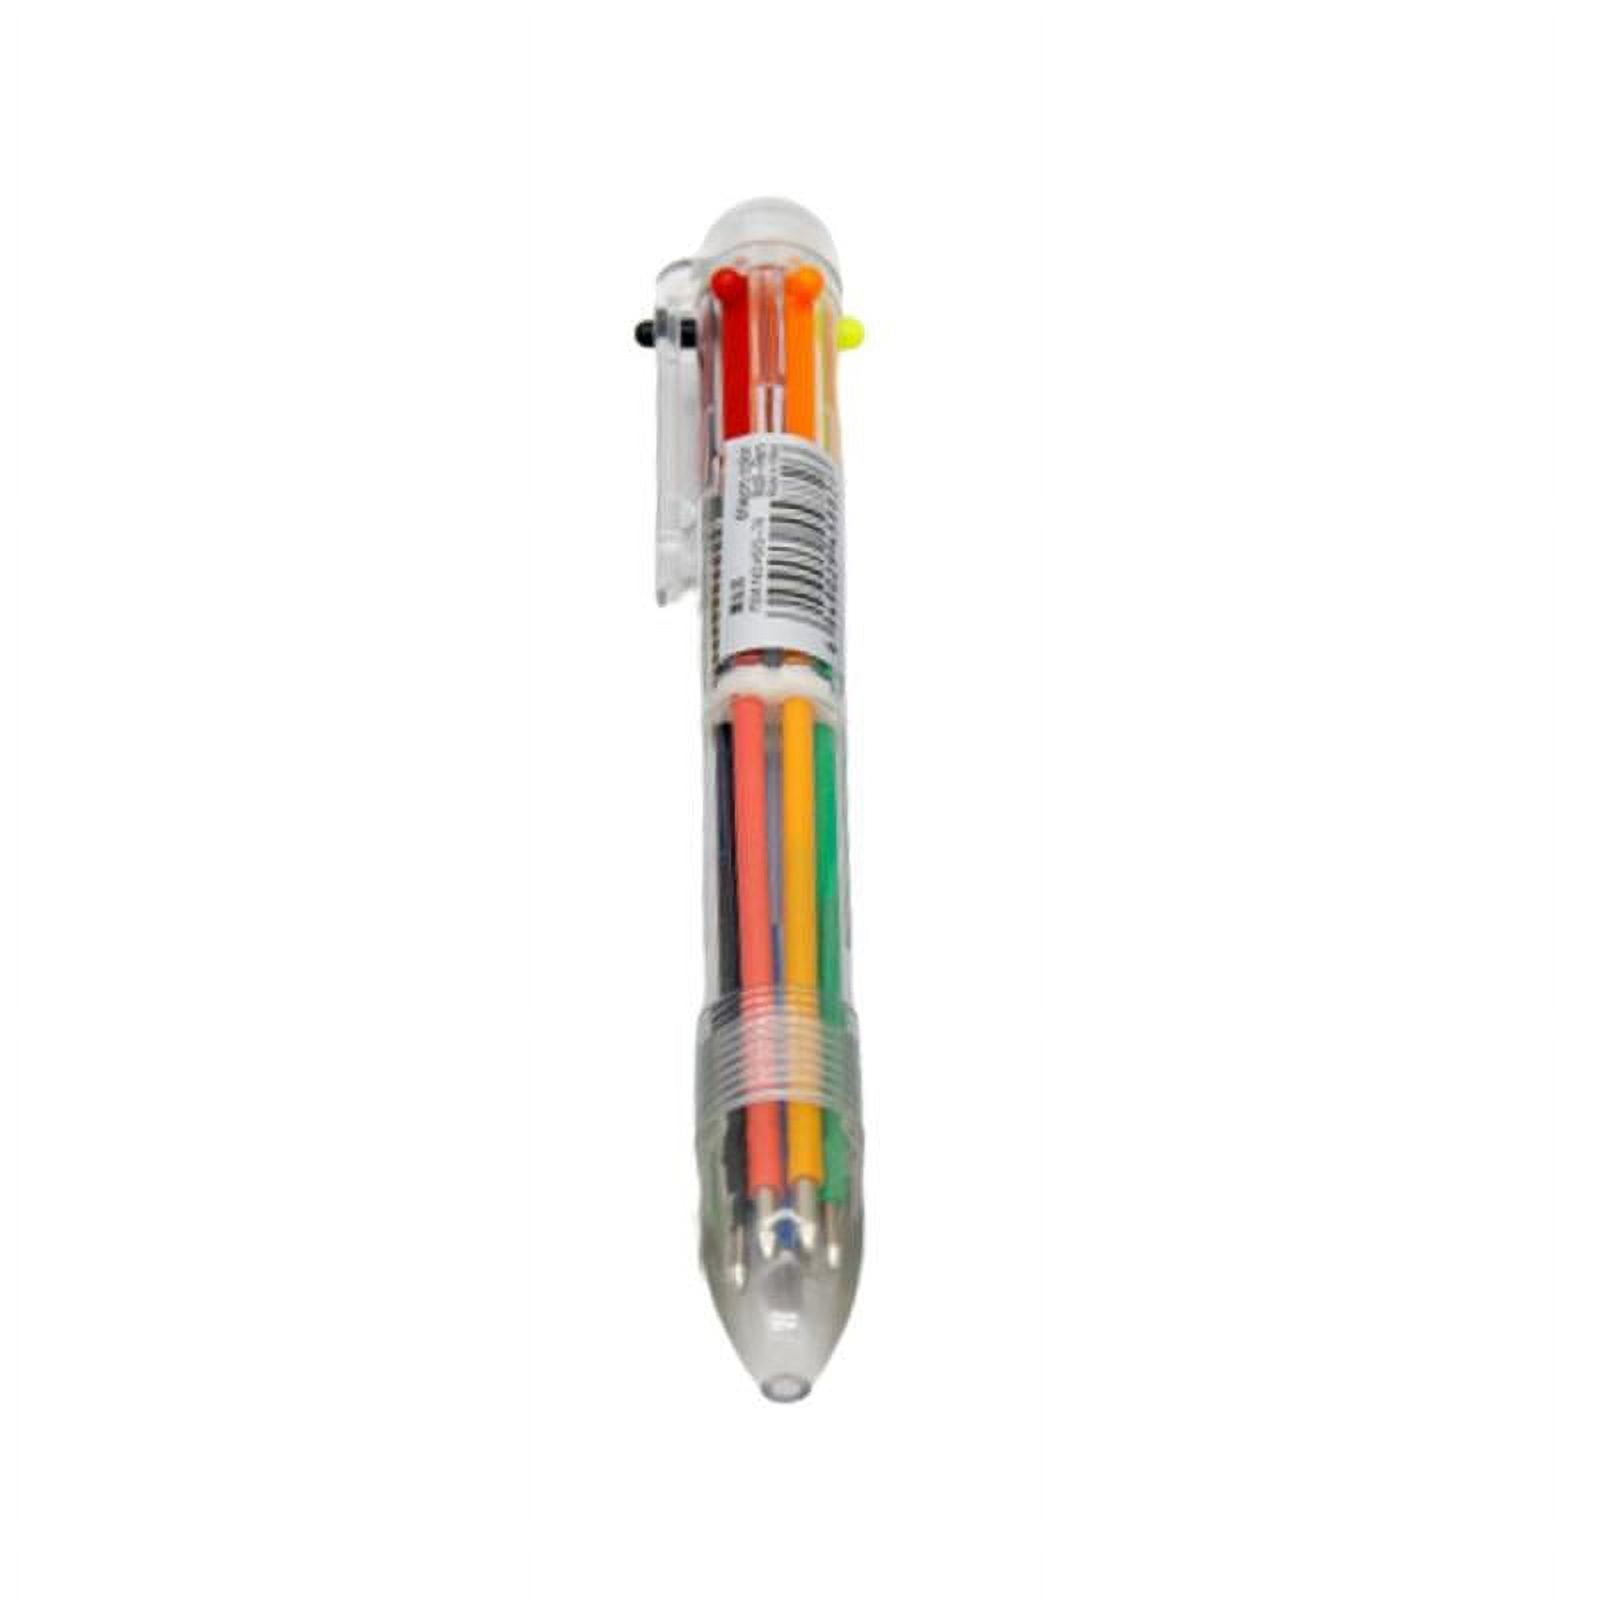 Retractable Multi Color Pen